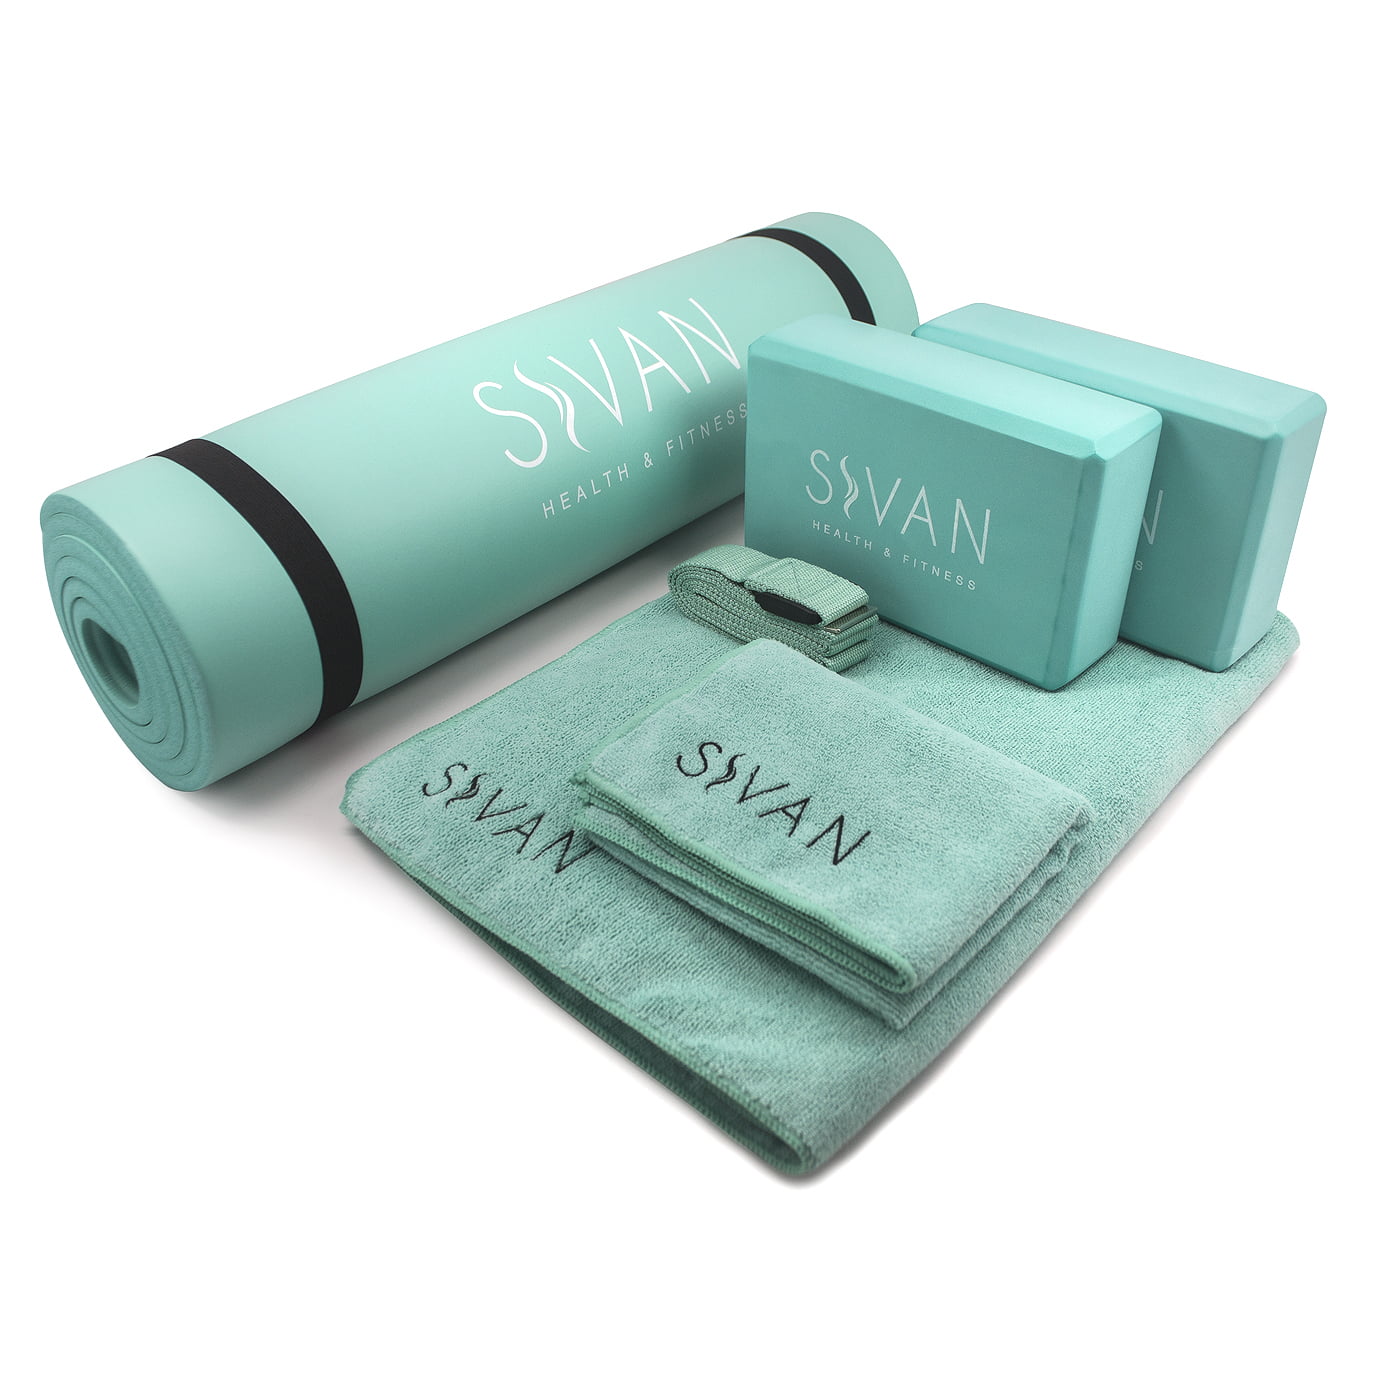 Sivan 6-Piece Yoga Set, Includes 1/2 Ultra Thick NBR Exercise Mat, 2 Yoga  Blocks, 1 Yoga Mat Towel, 1 Yoga Hand Towel and a Yoga Strap (Teal) 